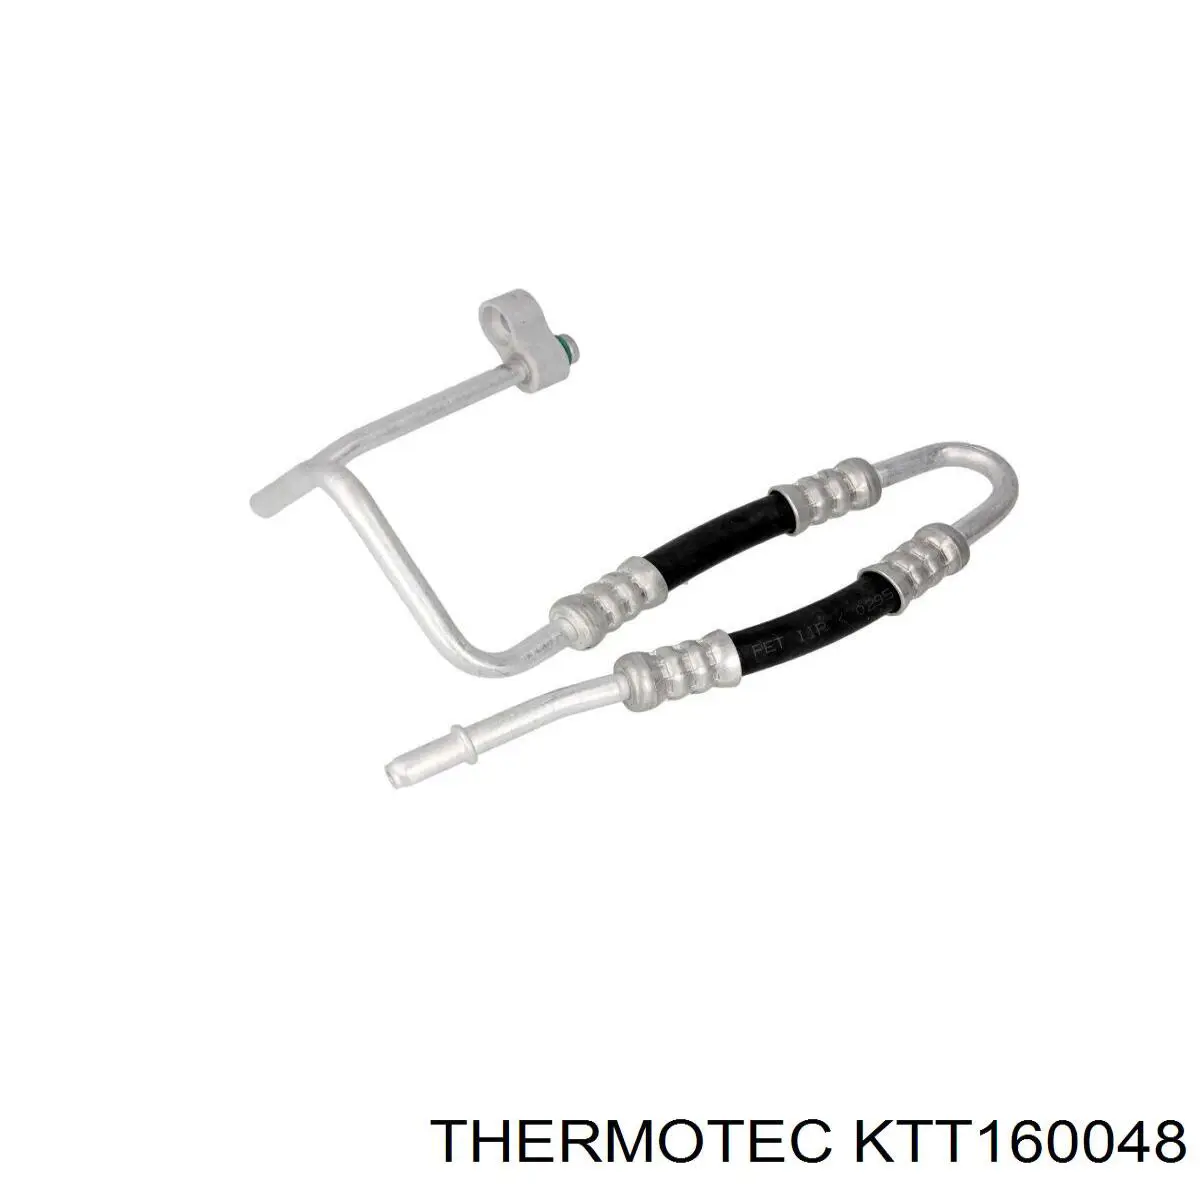 KTT160048 Thermotec tubería de baja / alta presión, aire acondicionado, de condensador a evaporador